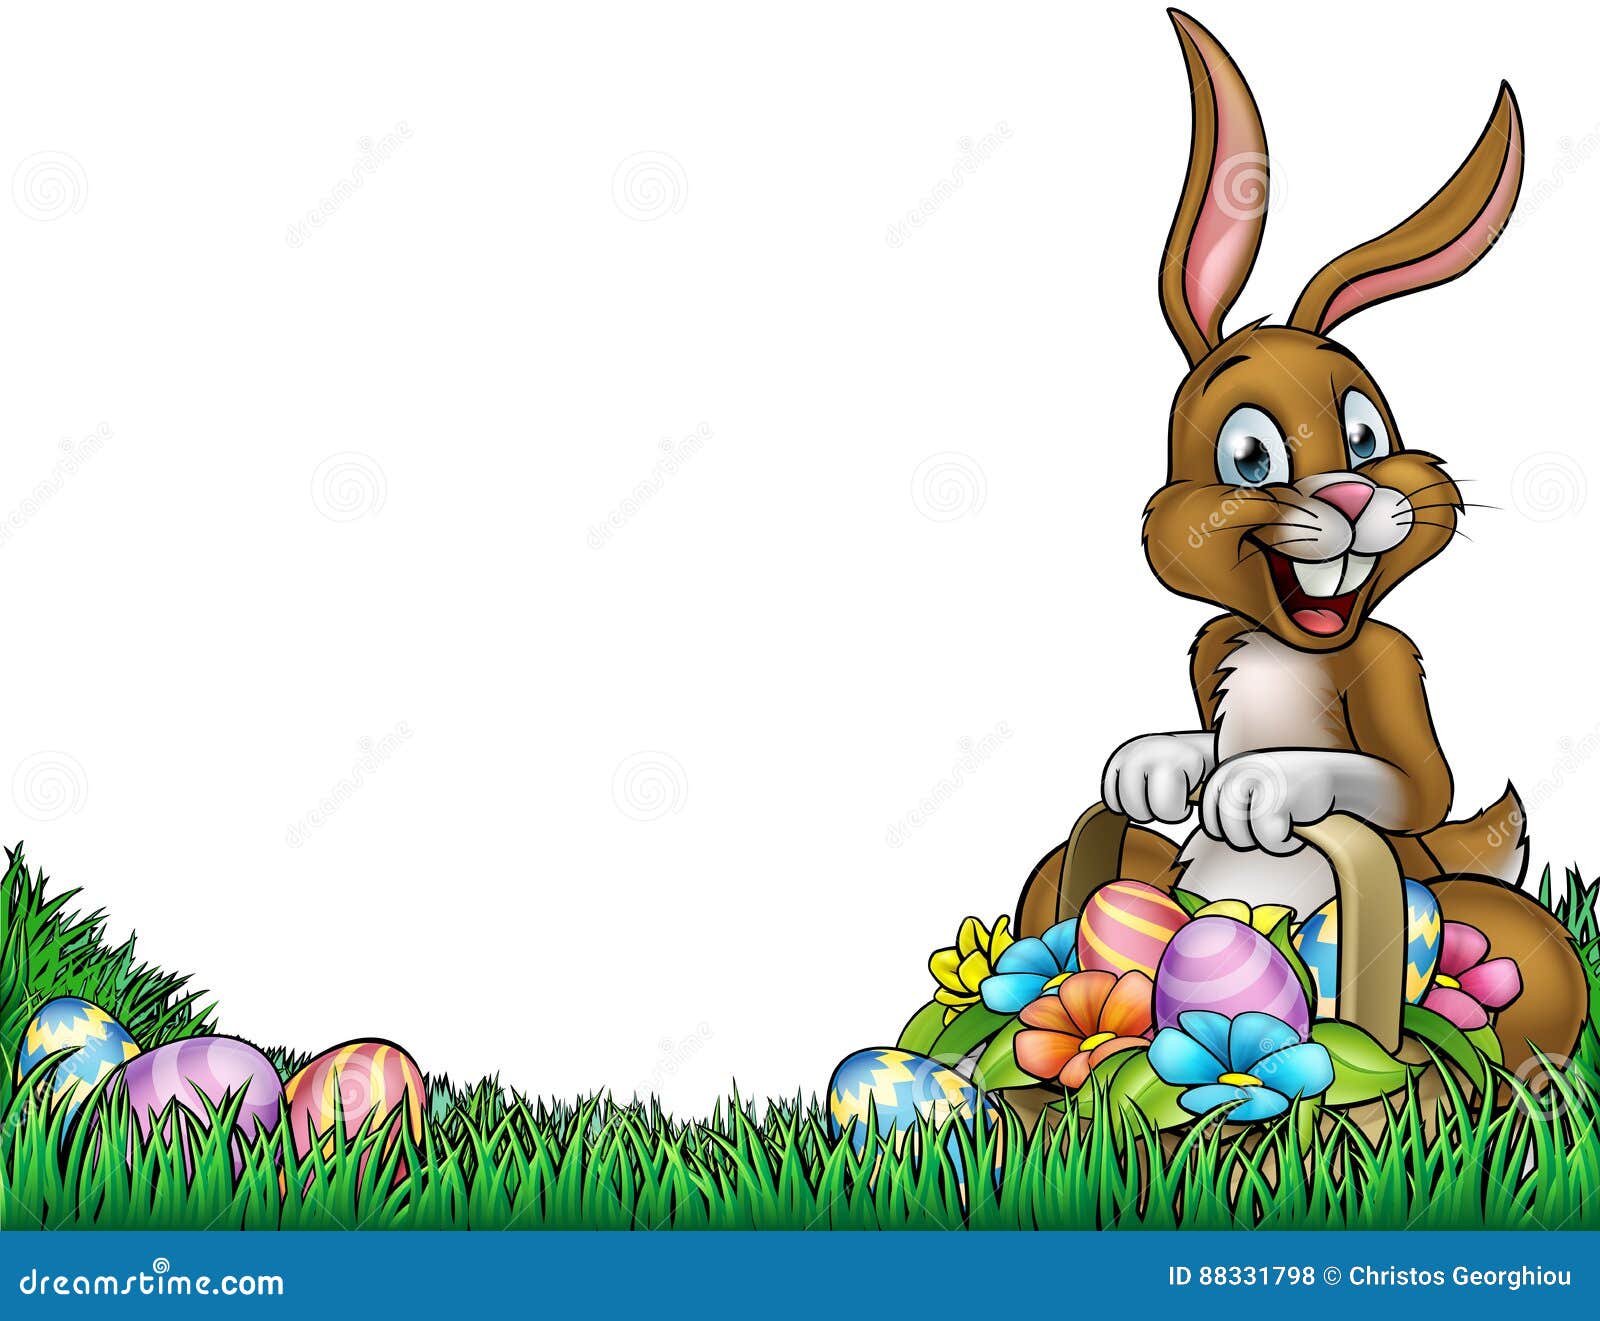 Easter Egg Hunt Bunny Background Stock Vector Illustration Of Back Ground 1798